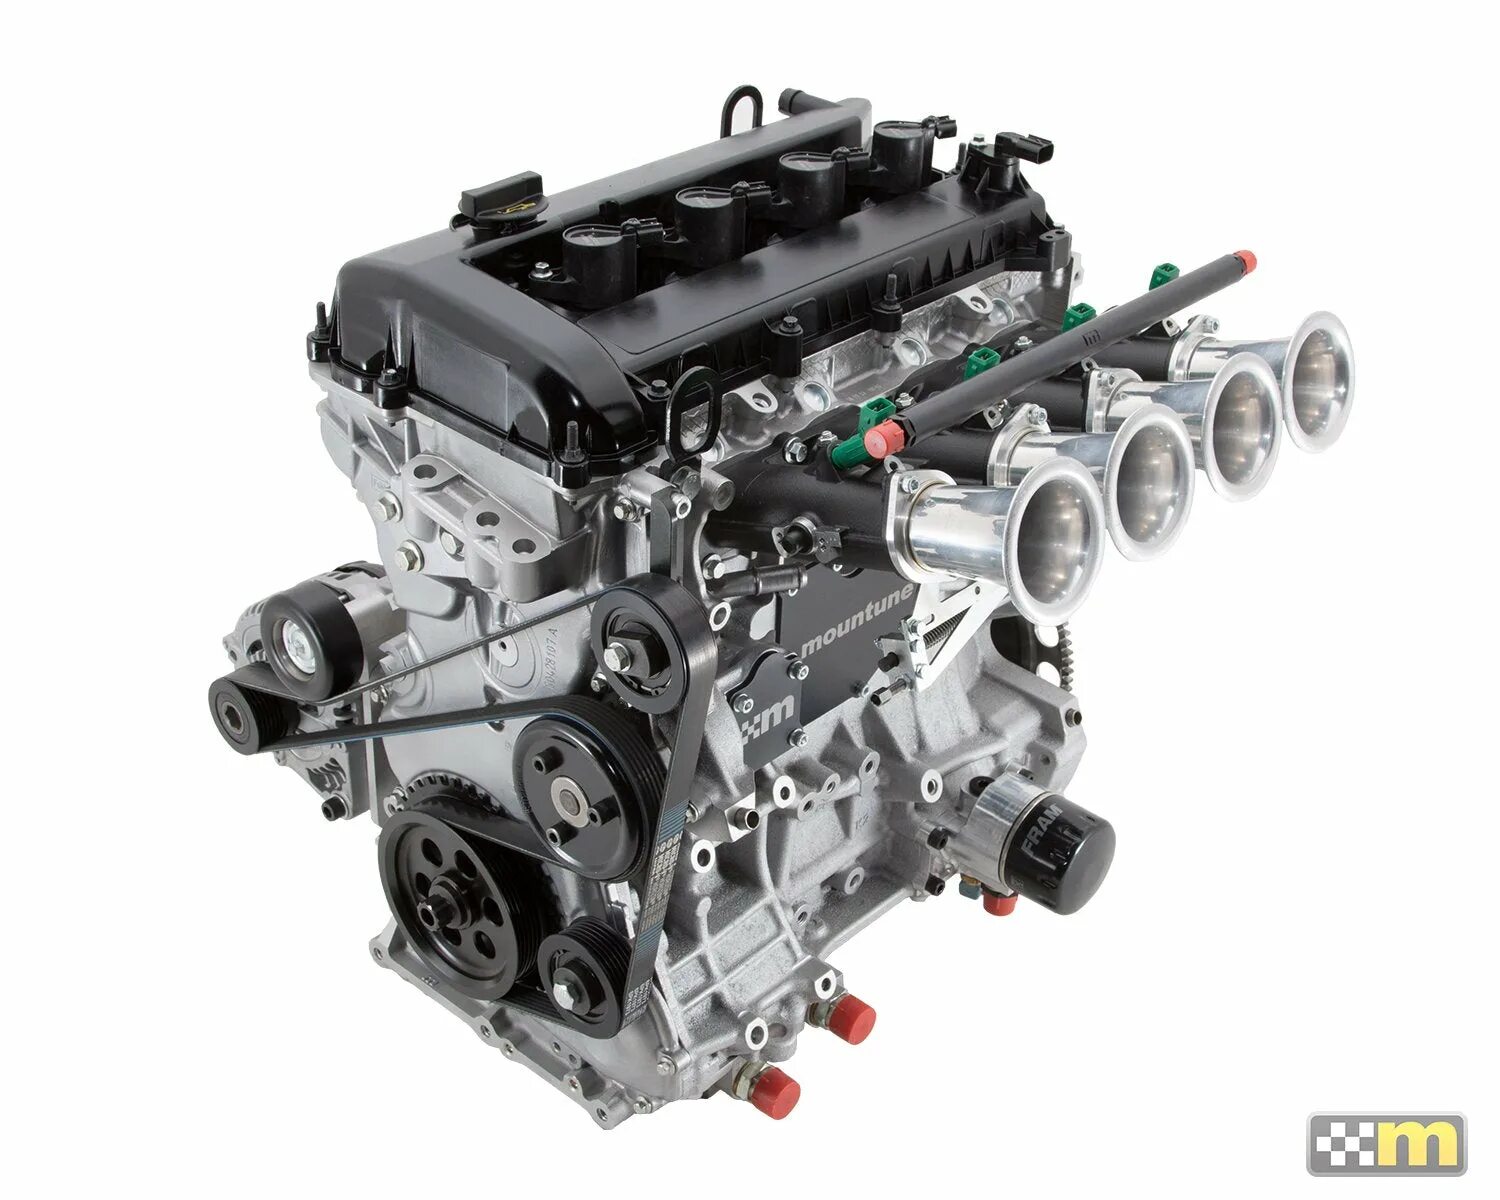 Джулиан какой двигатель. Duratec he 2.0 145 л.с. Форд Duratec 2.0. 2.0 Duratec 5162156. Двигатель дуратек 2 литра 145 л.с.